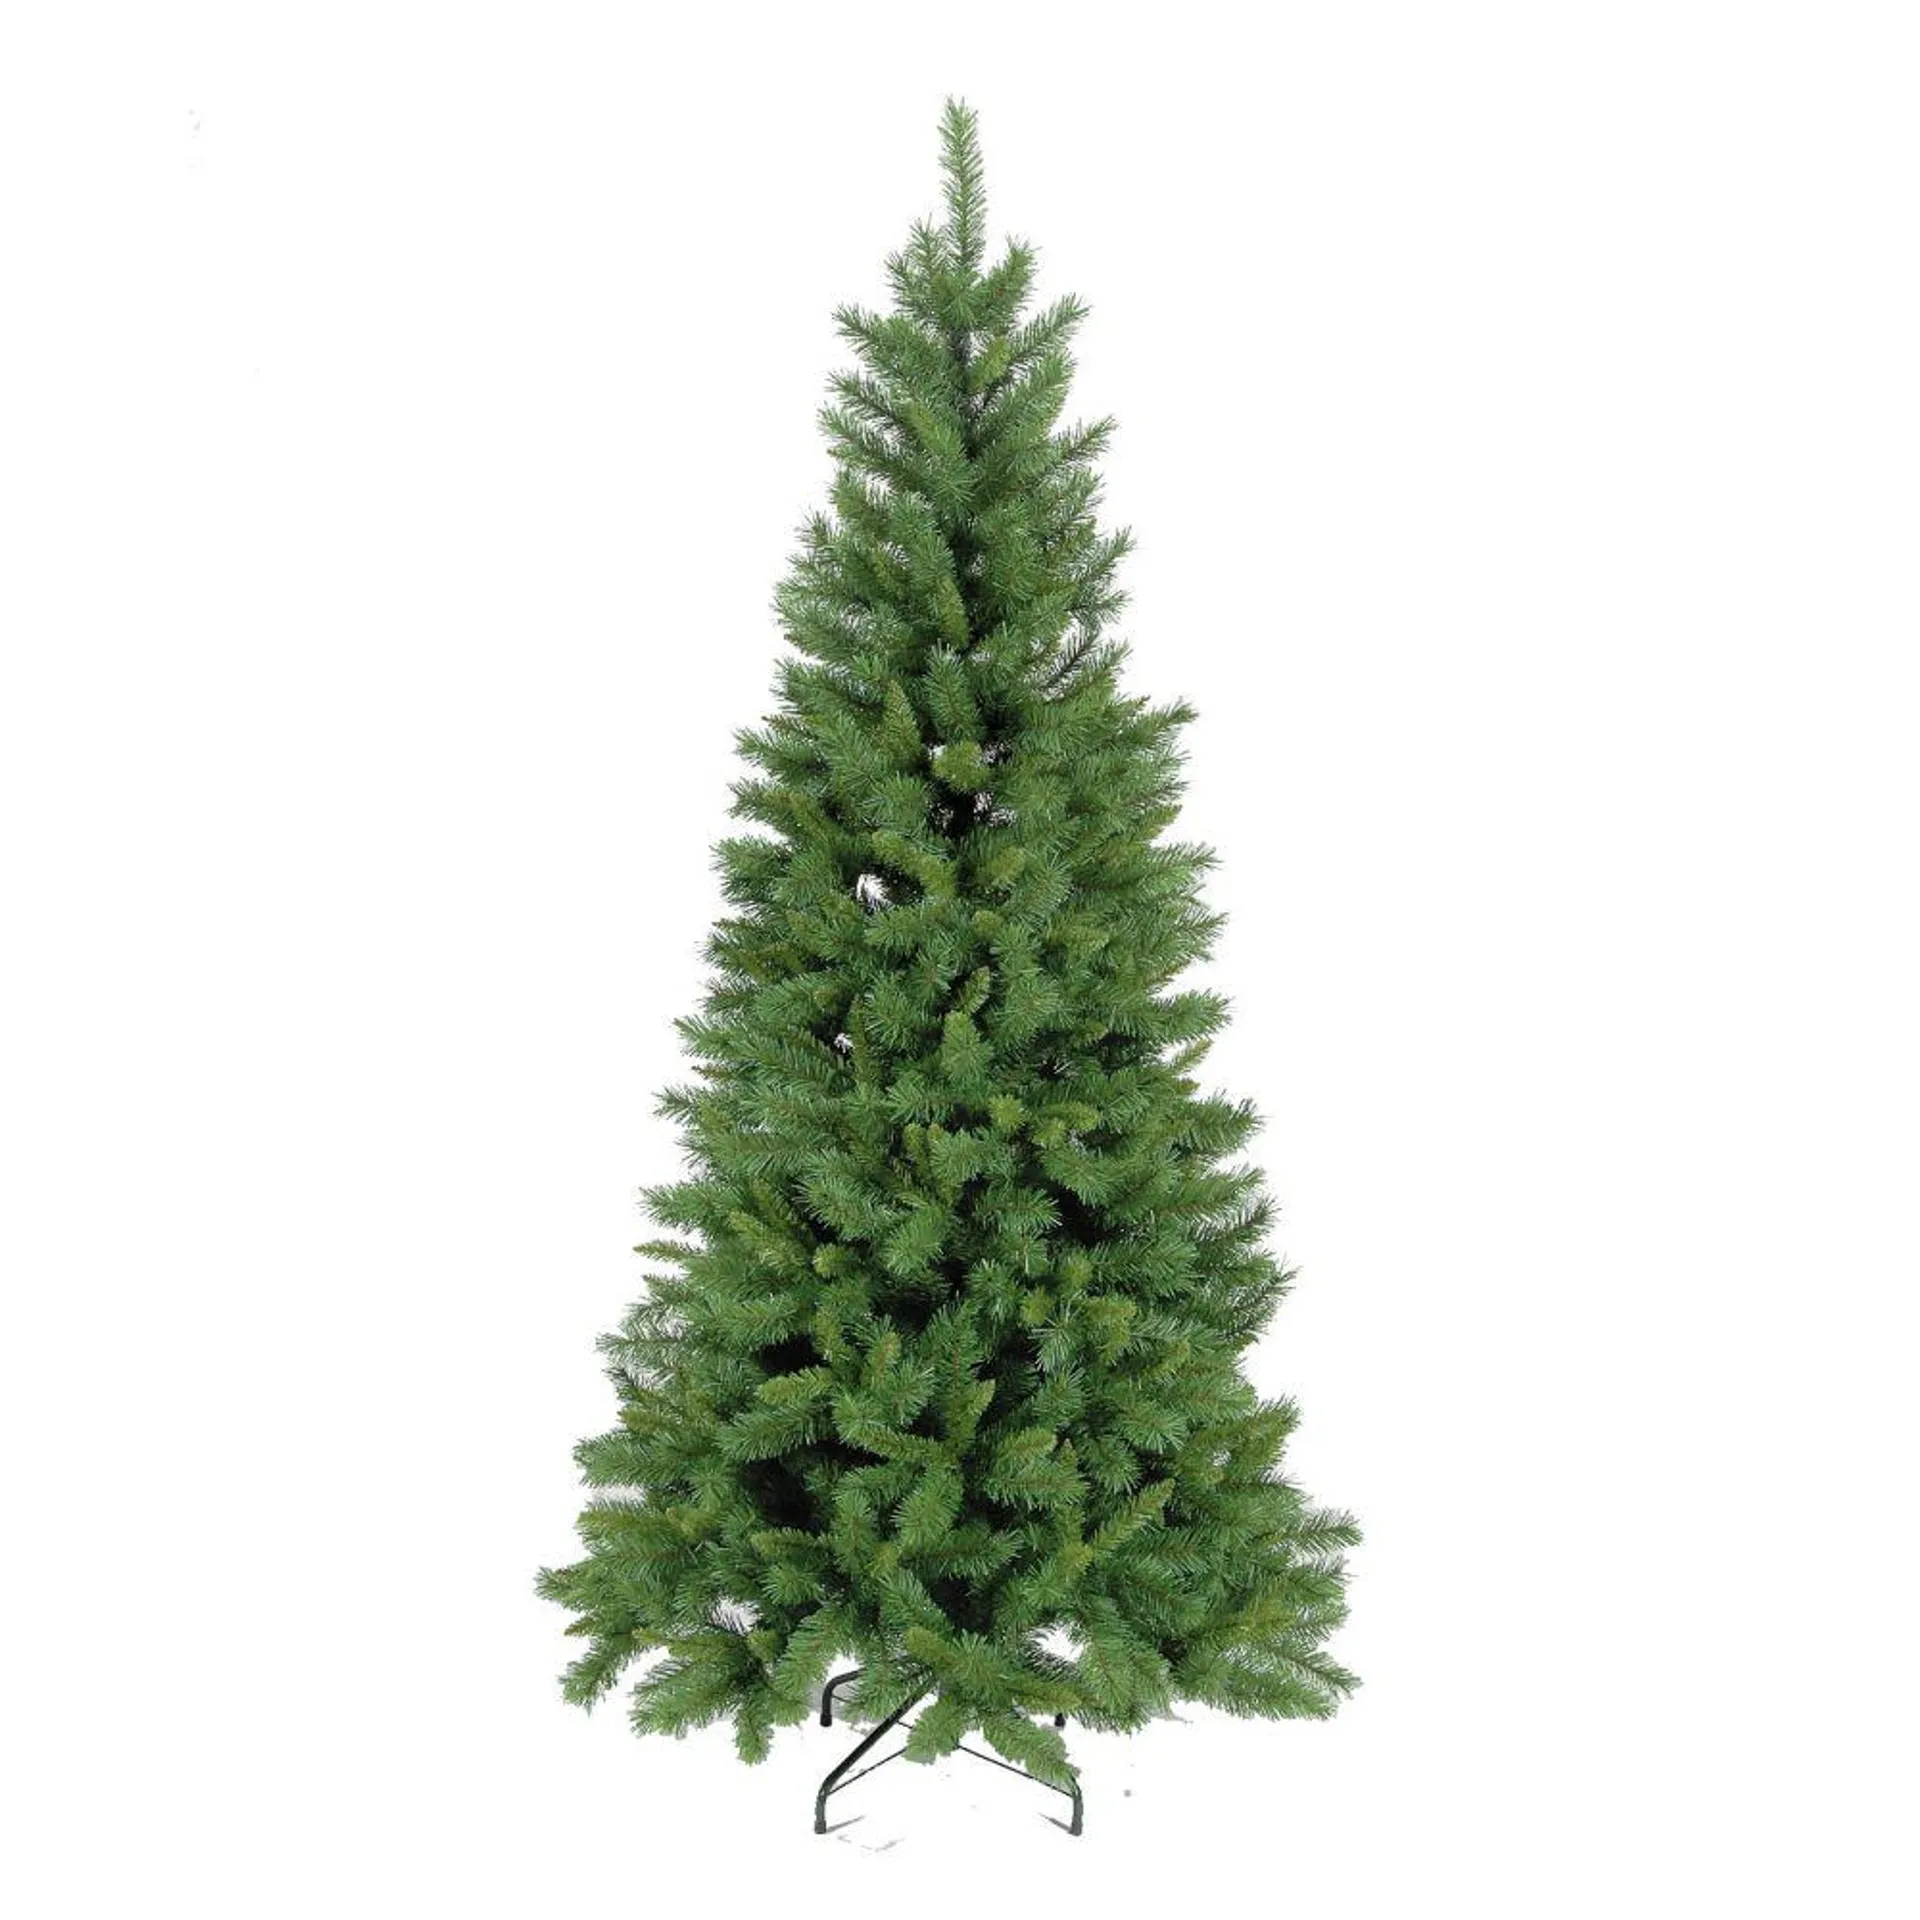 New Duchess Spruce Christmas Tree Slim Artificial Hinged Easy Setup